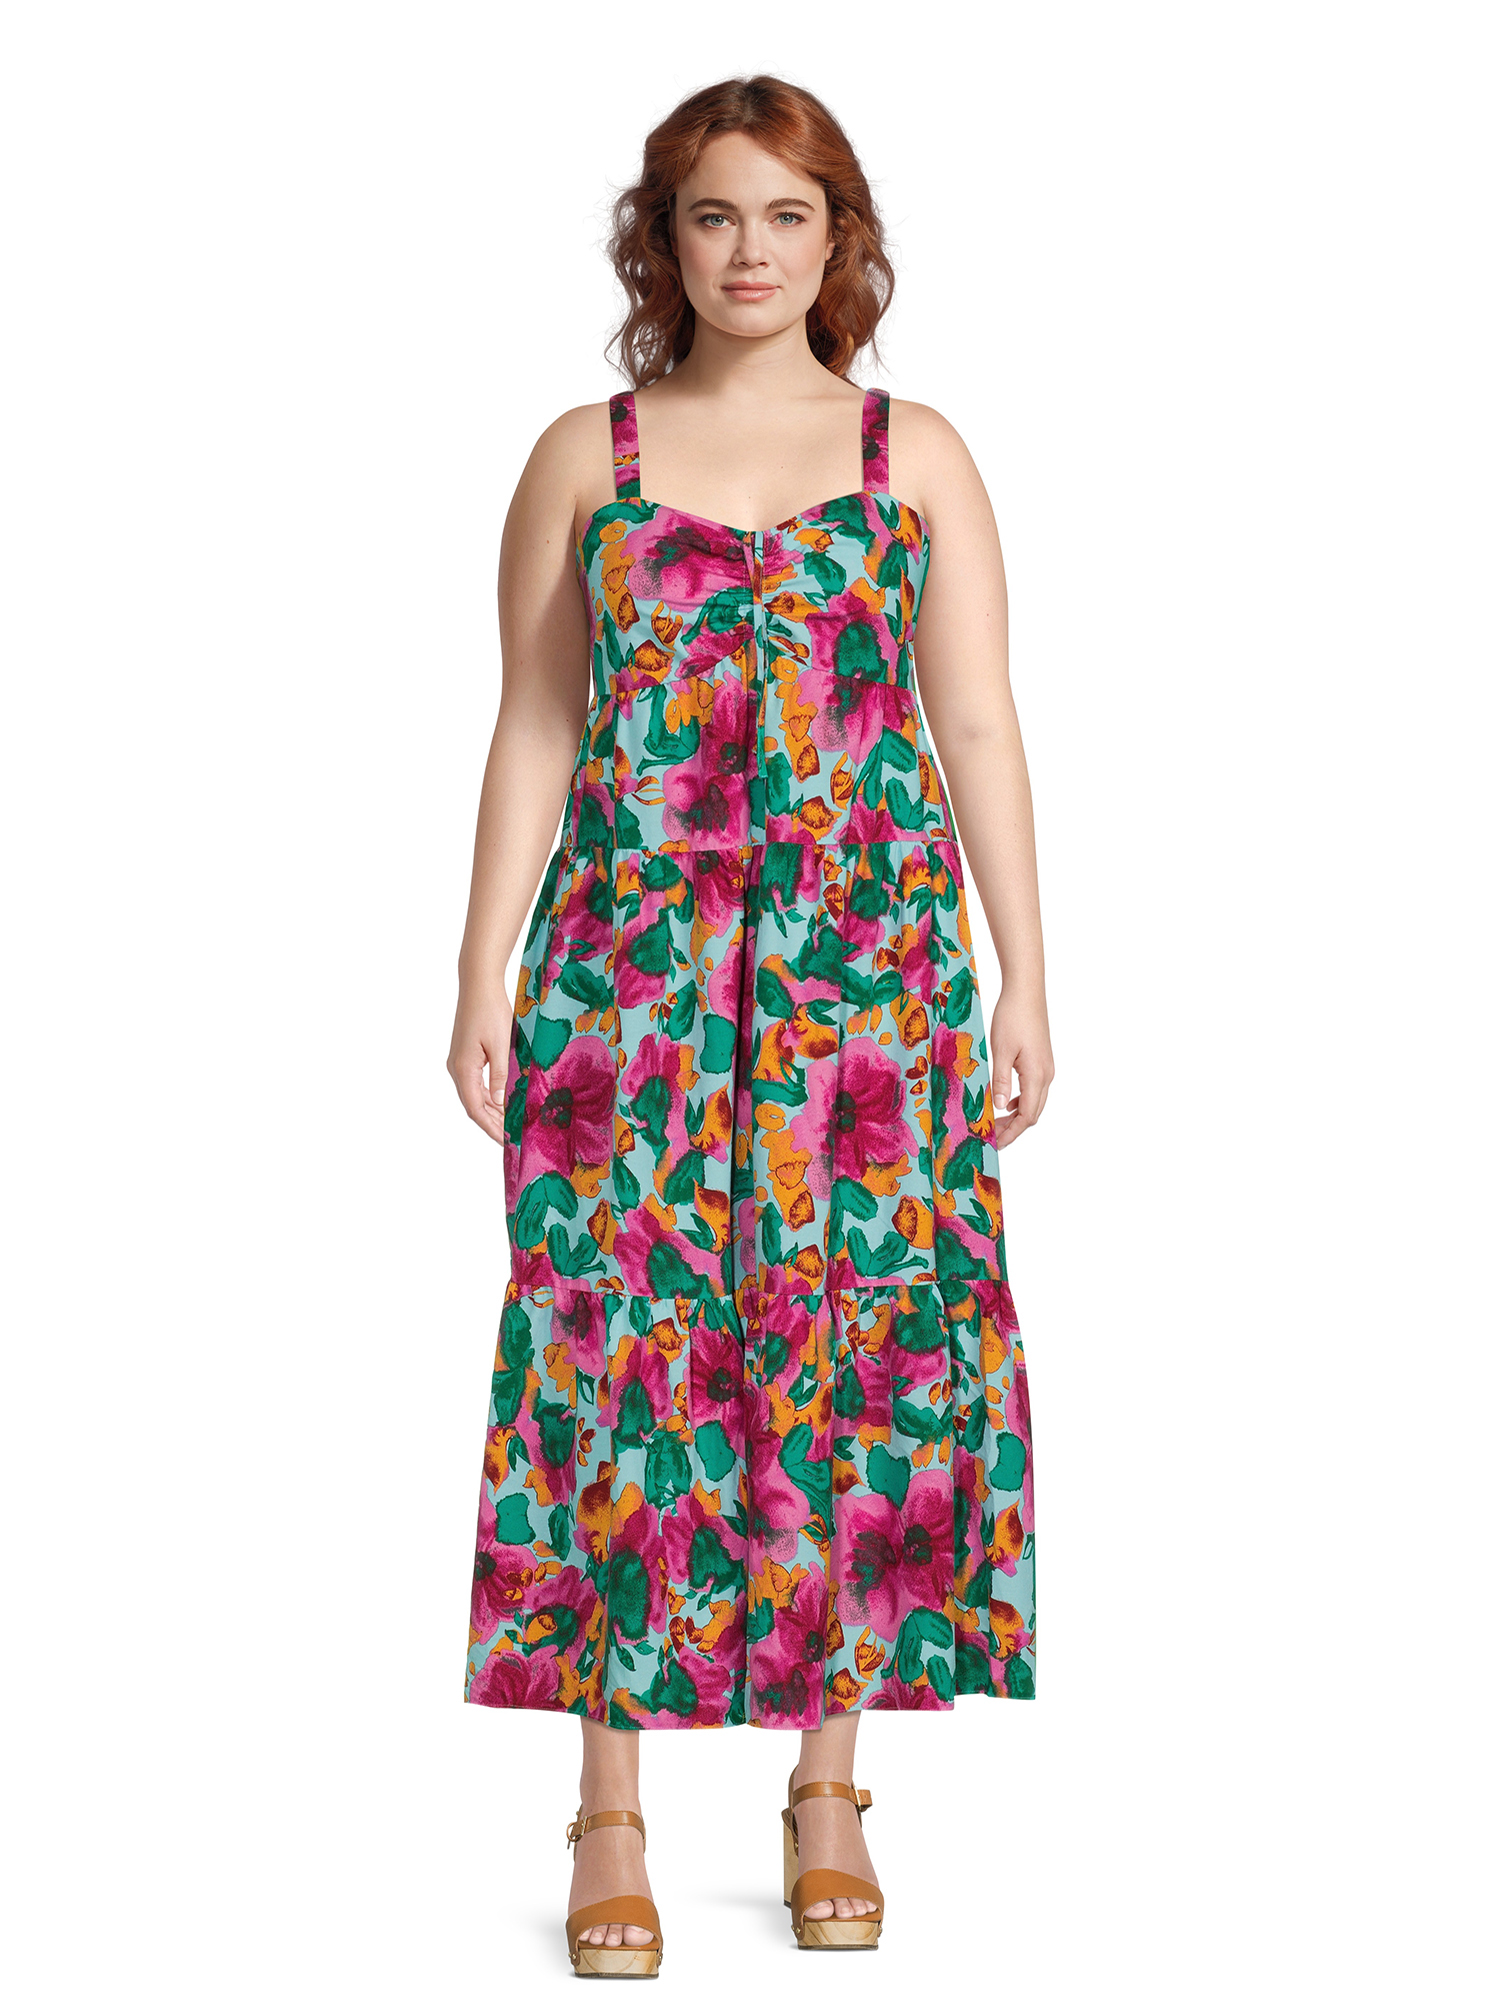 Terra & Sky Women's Plus Size Tiered Maxi Dress - Walmart.com